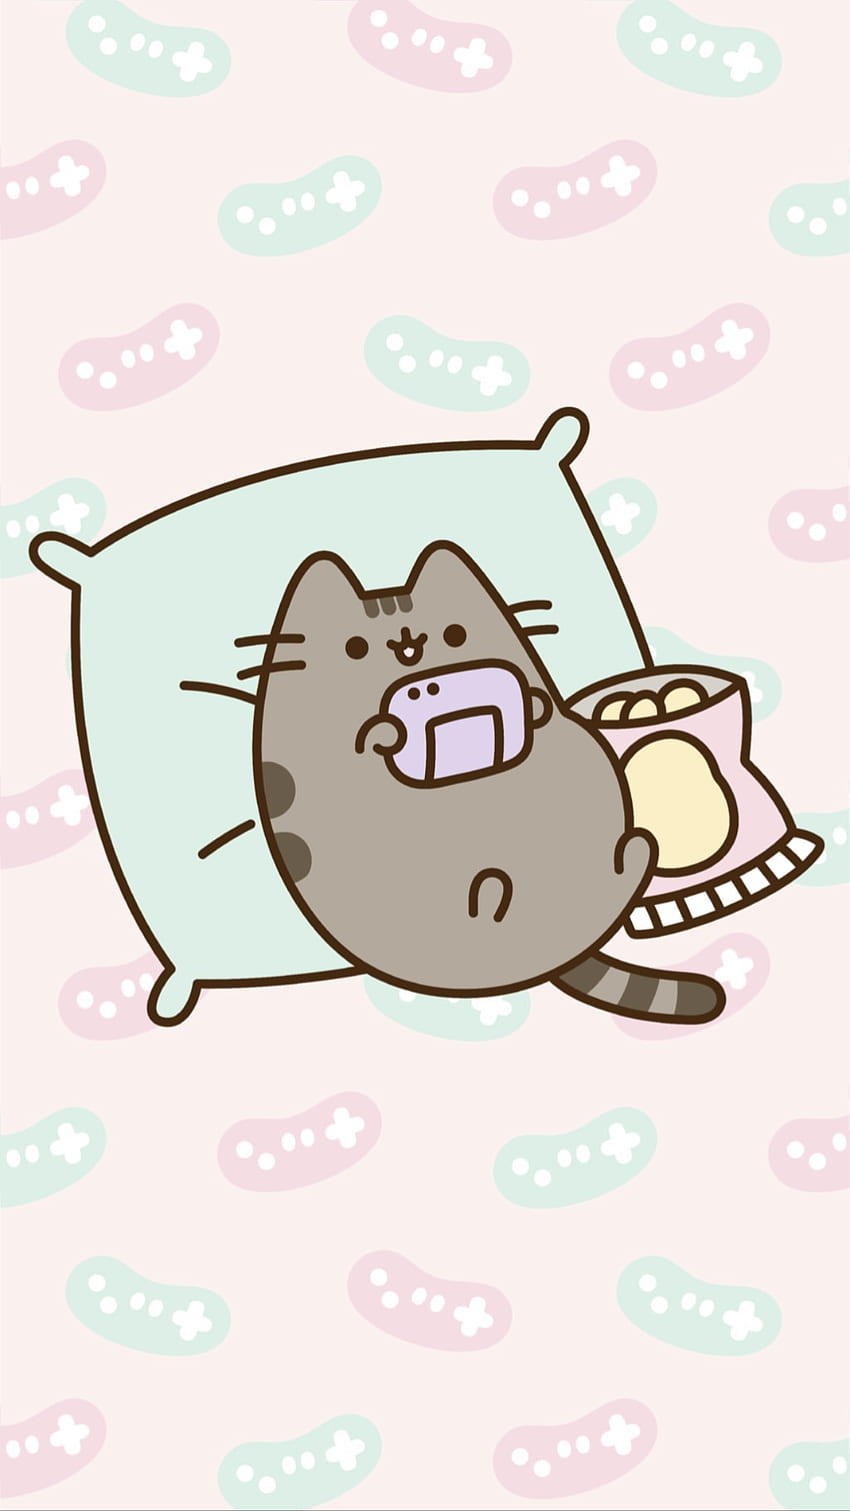 Anime Cat Pusheen Bread Head Greeting GIF | GIFDB.com